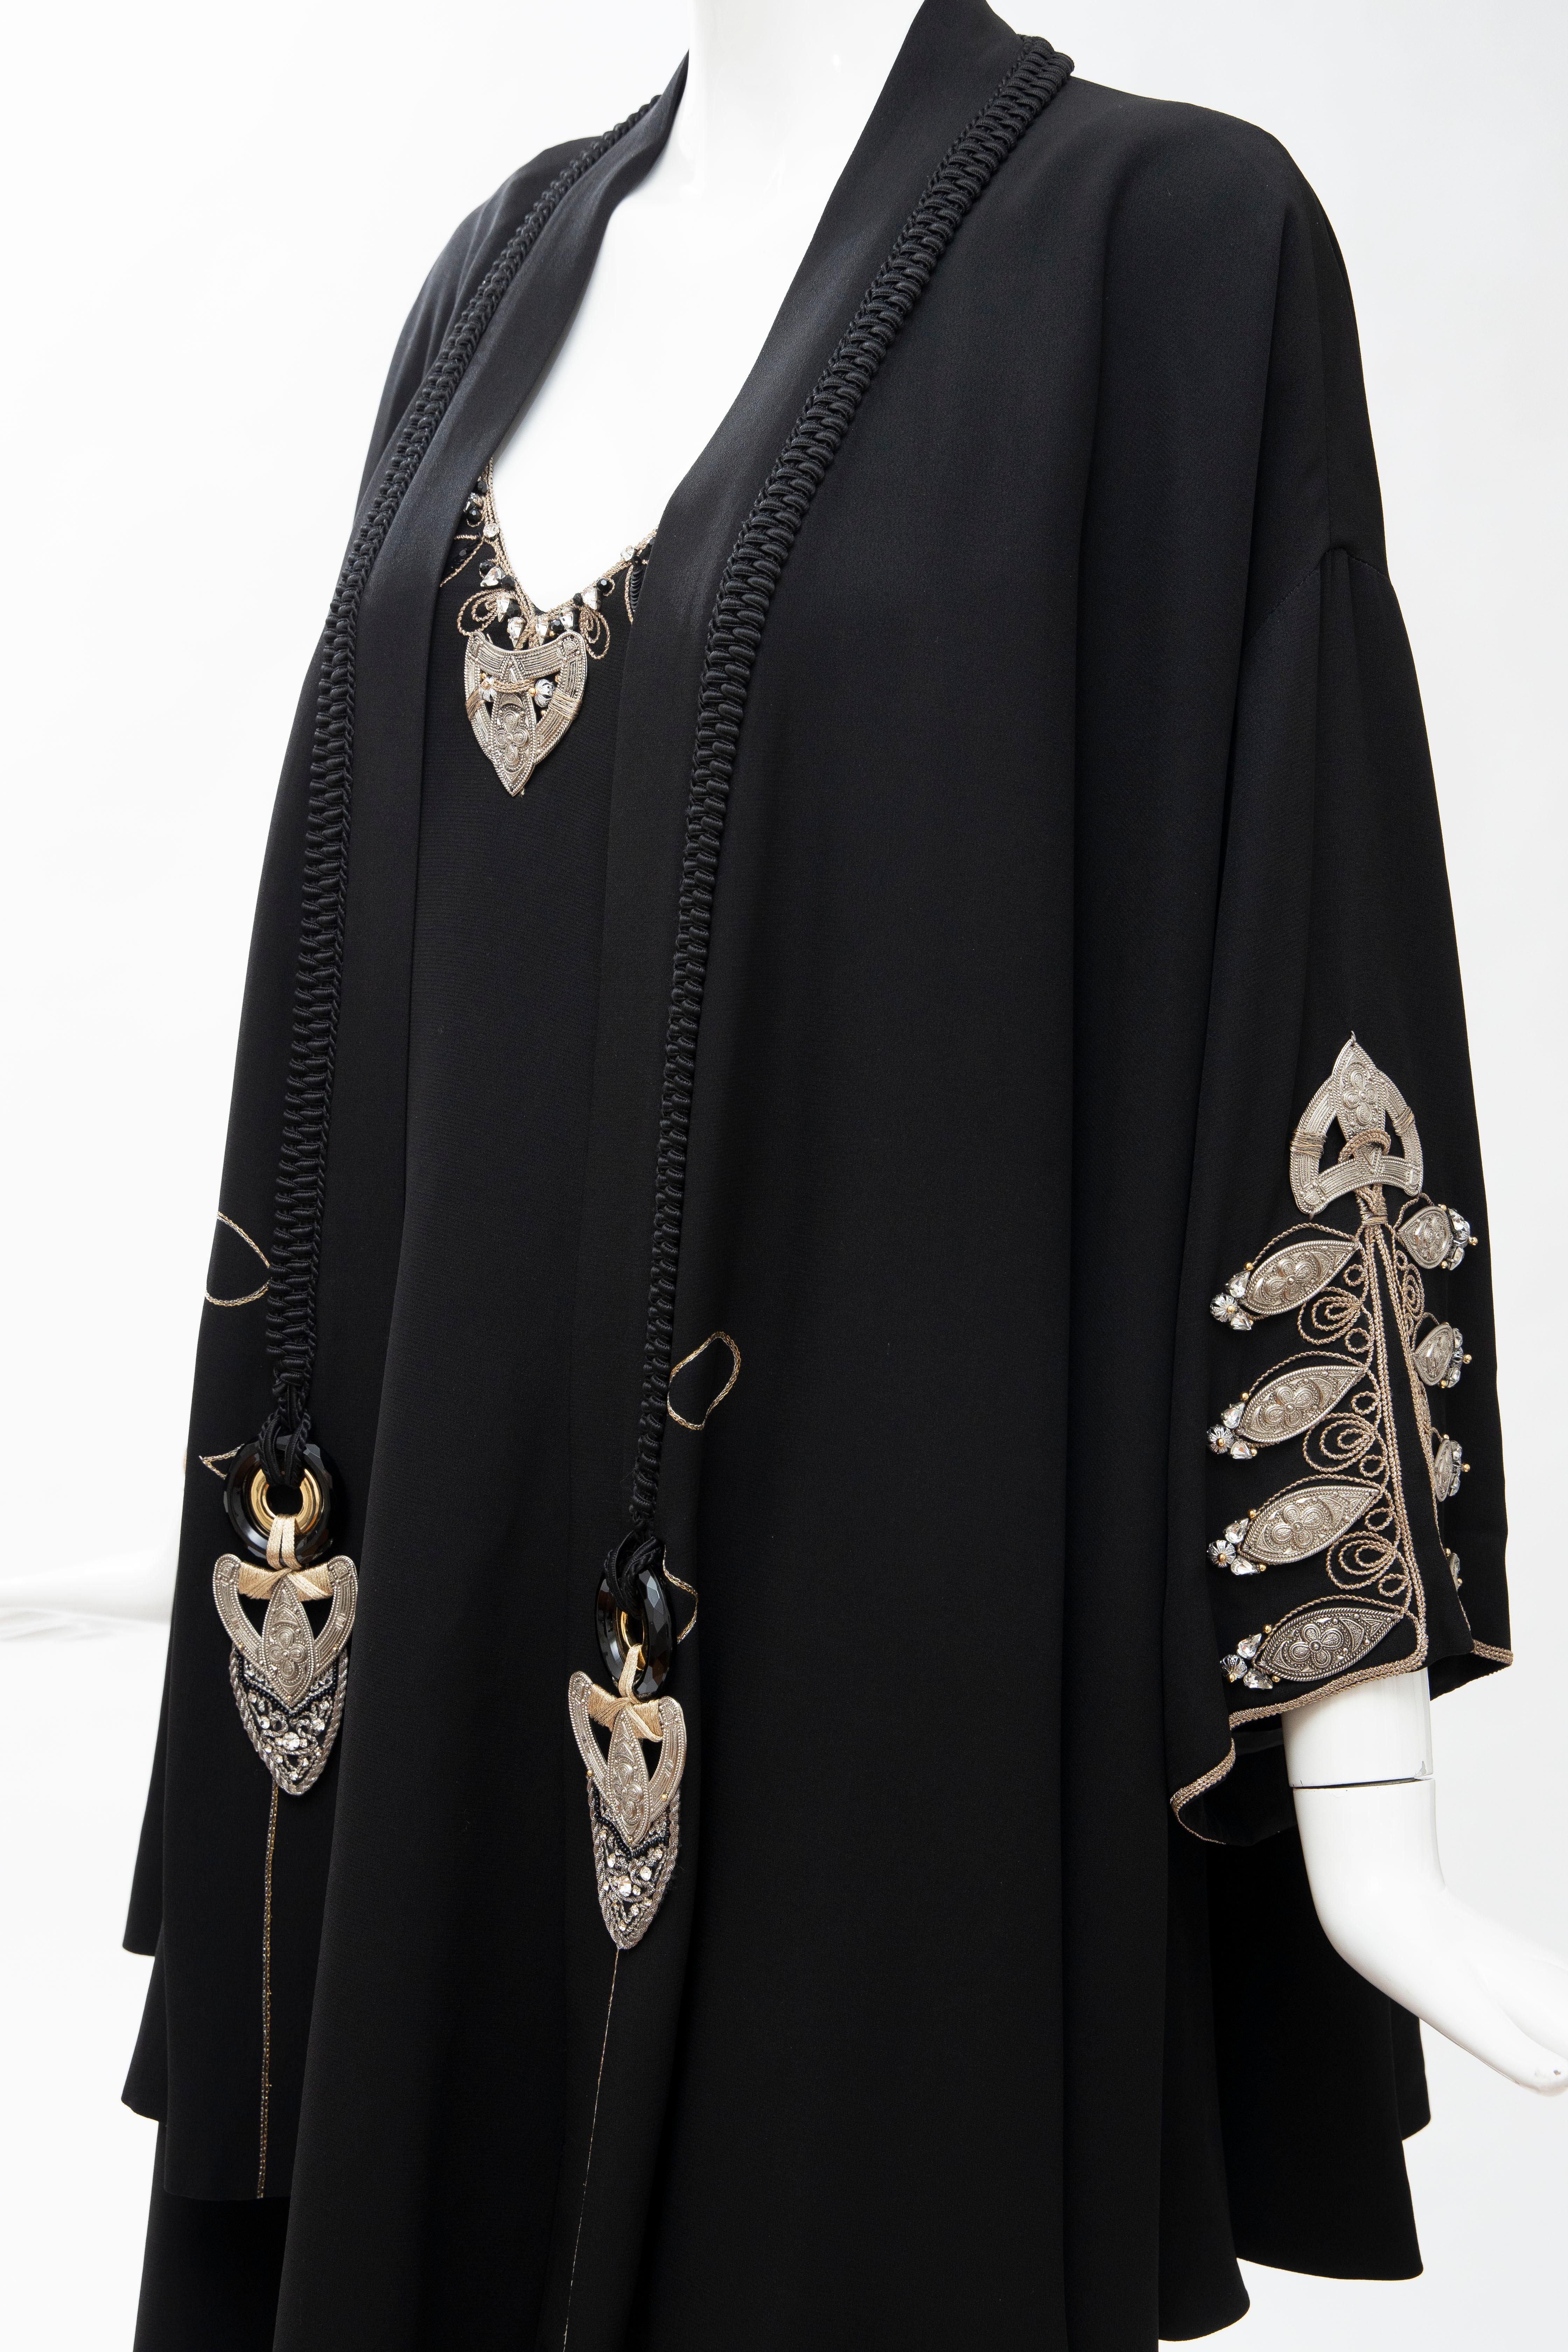 Christian Dior Gianfranco Ferré Numbered Black Embroidered Dress Ensemble, 1991 9